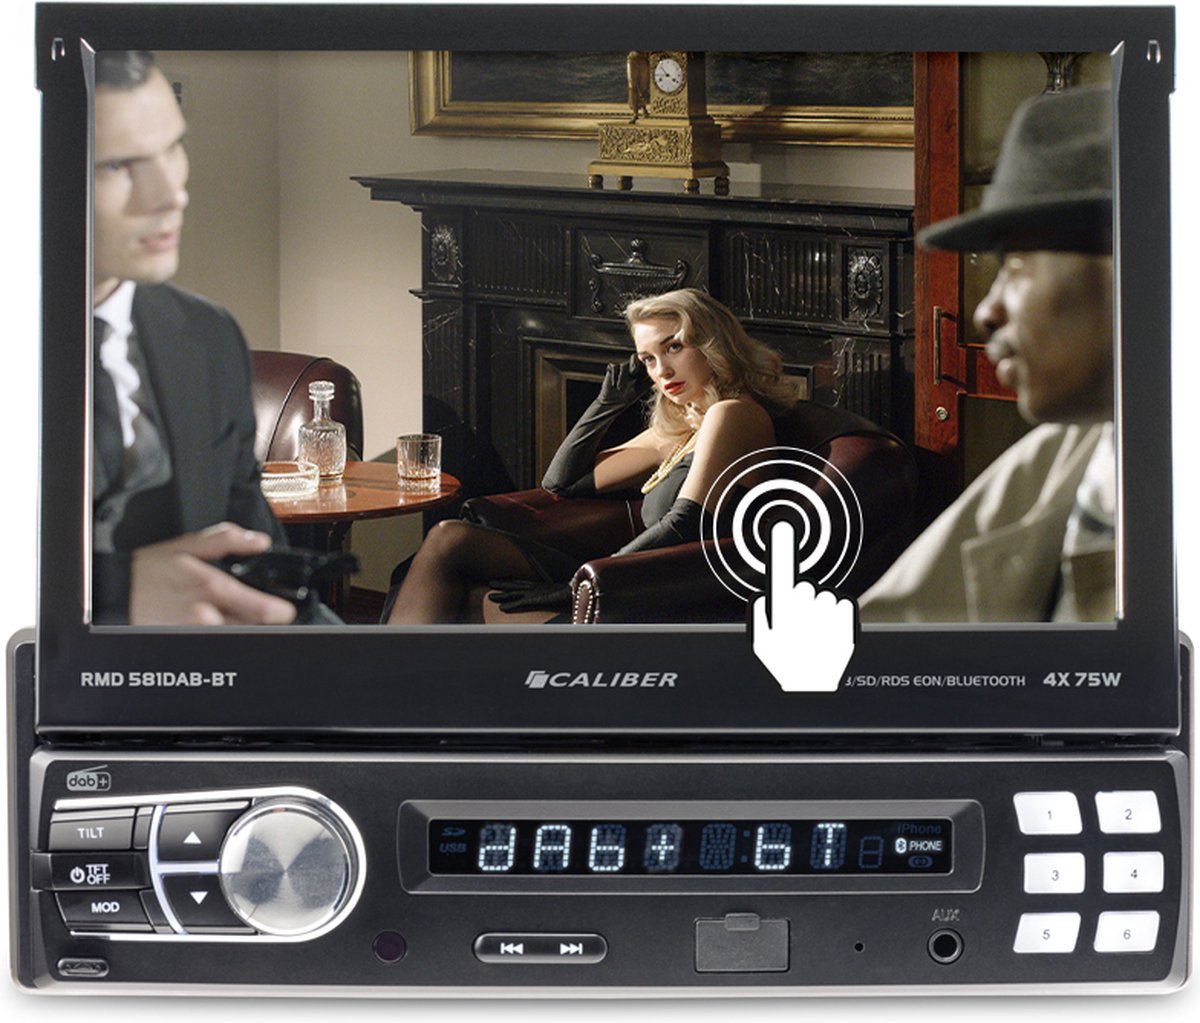 Autoradio met Bluetooth - FM, CD, AUX, SD en USB - 1 DIN - Retro - Radio  voor Oldtimer - Zilver (RCD120BT)